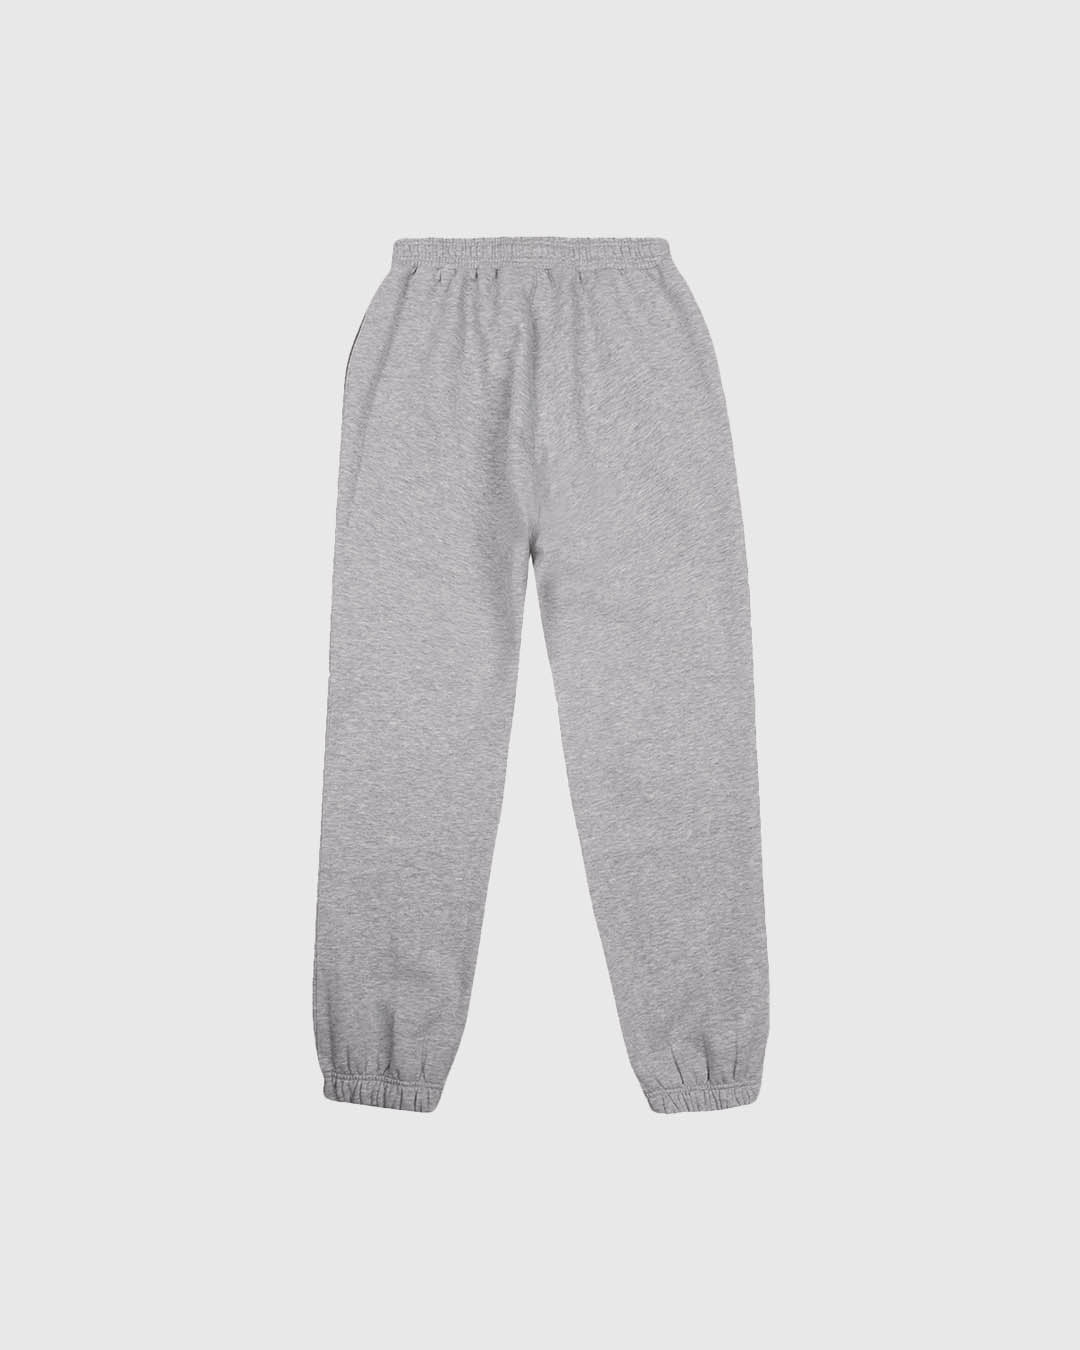 PFC: 003-3 - Women's Sweatpants - Grey Marl